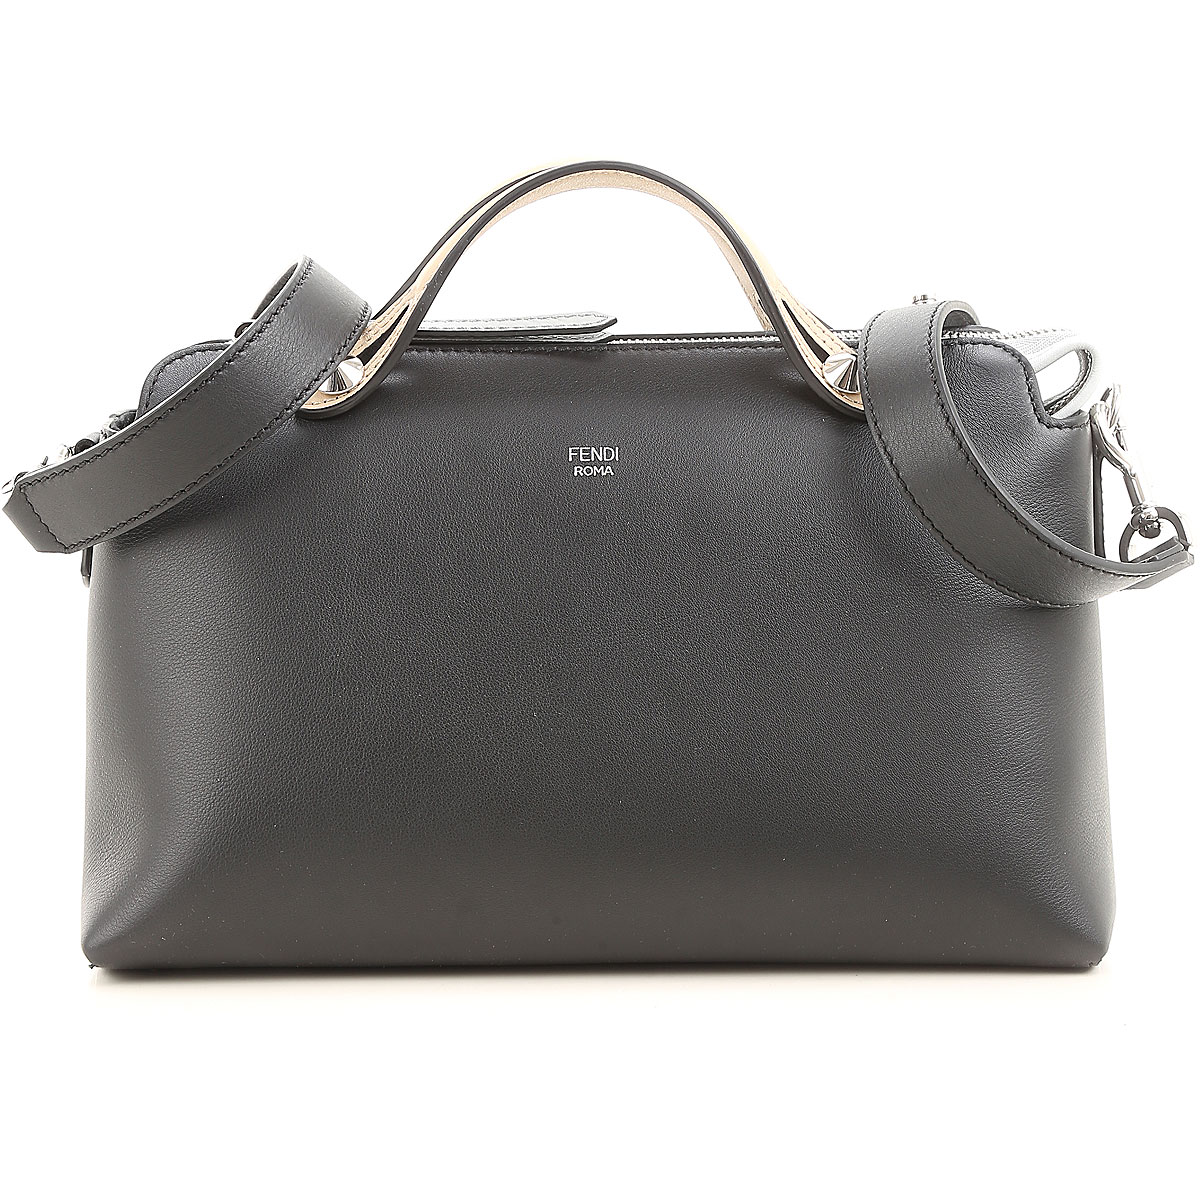 Handbags Fendi, Style code: 8bl124-5qj-f10q3